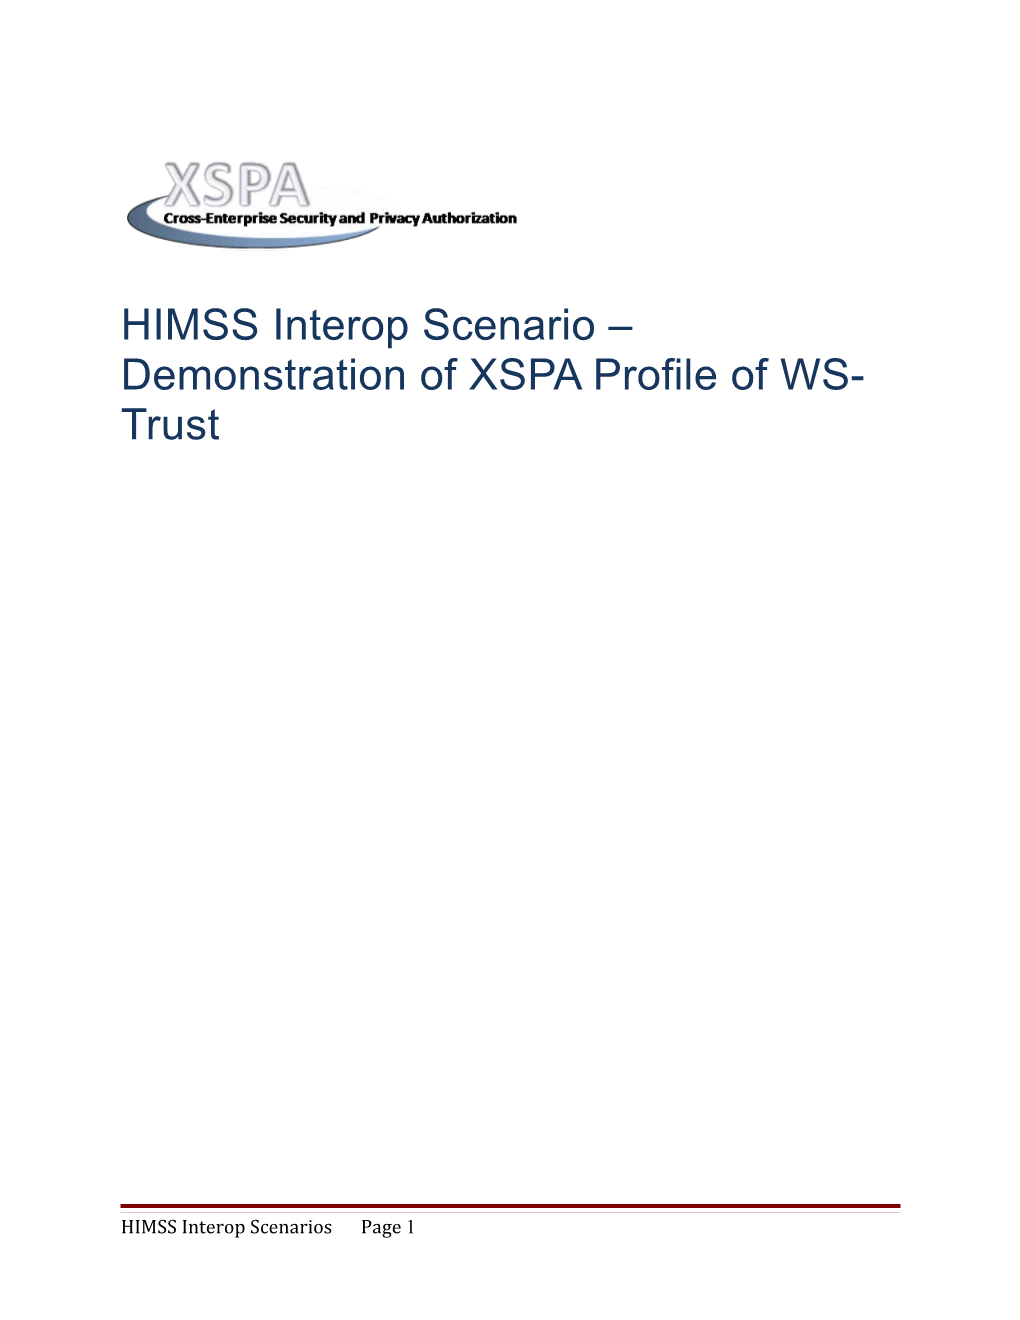 HIMSS Interop Scenario Demonstration of XSPA Profile of WS-Trust